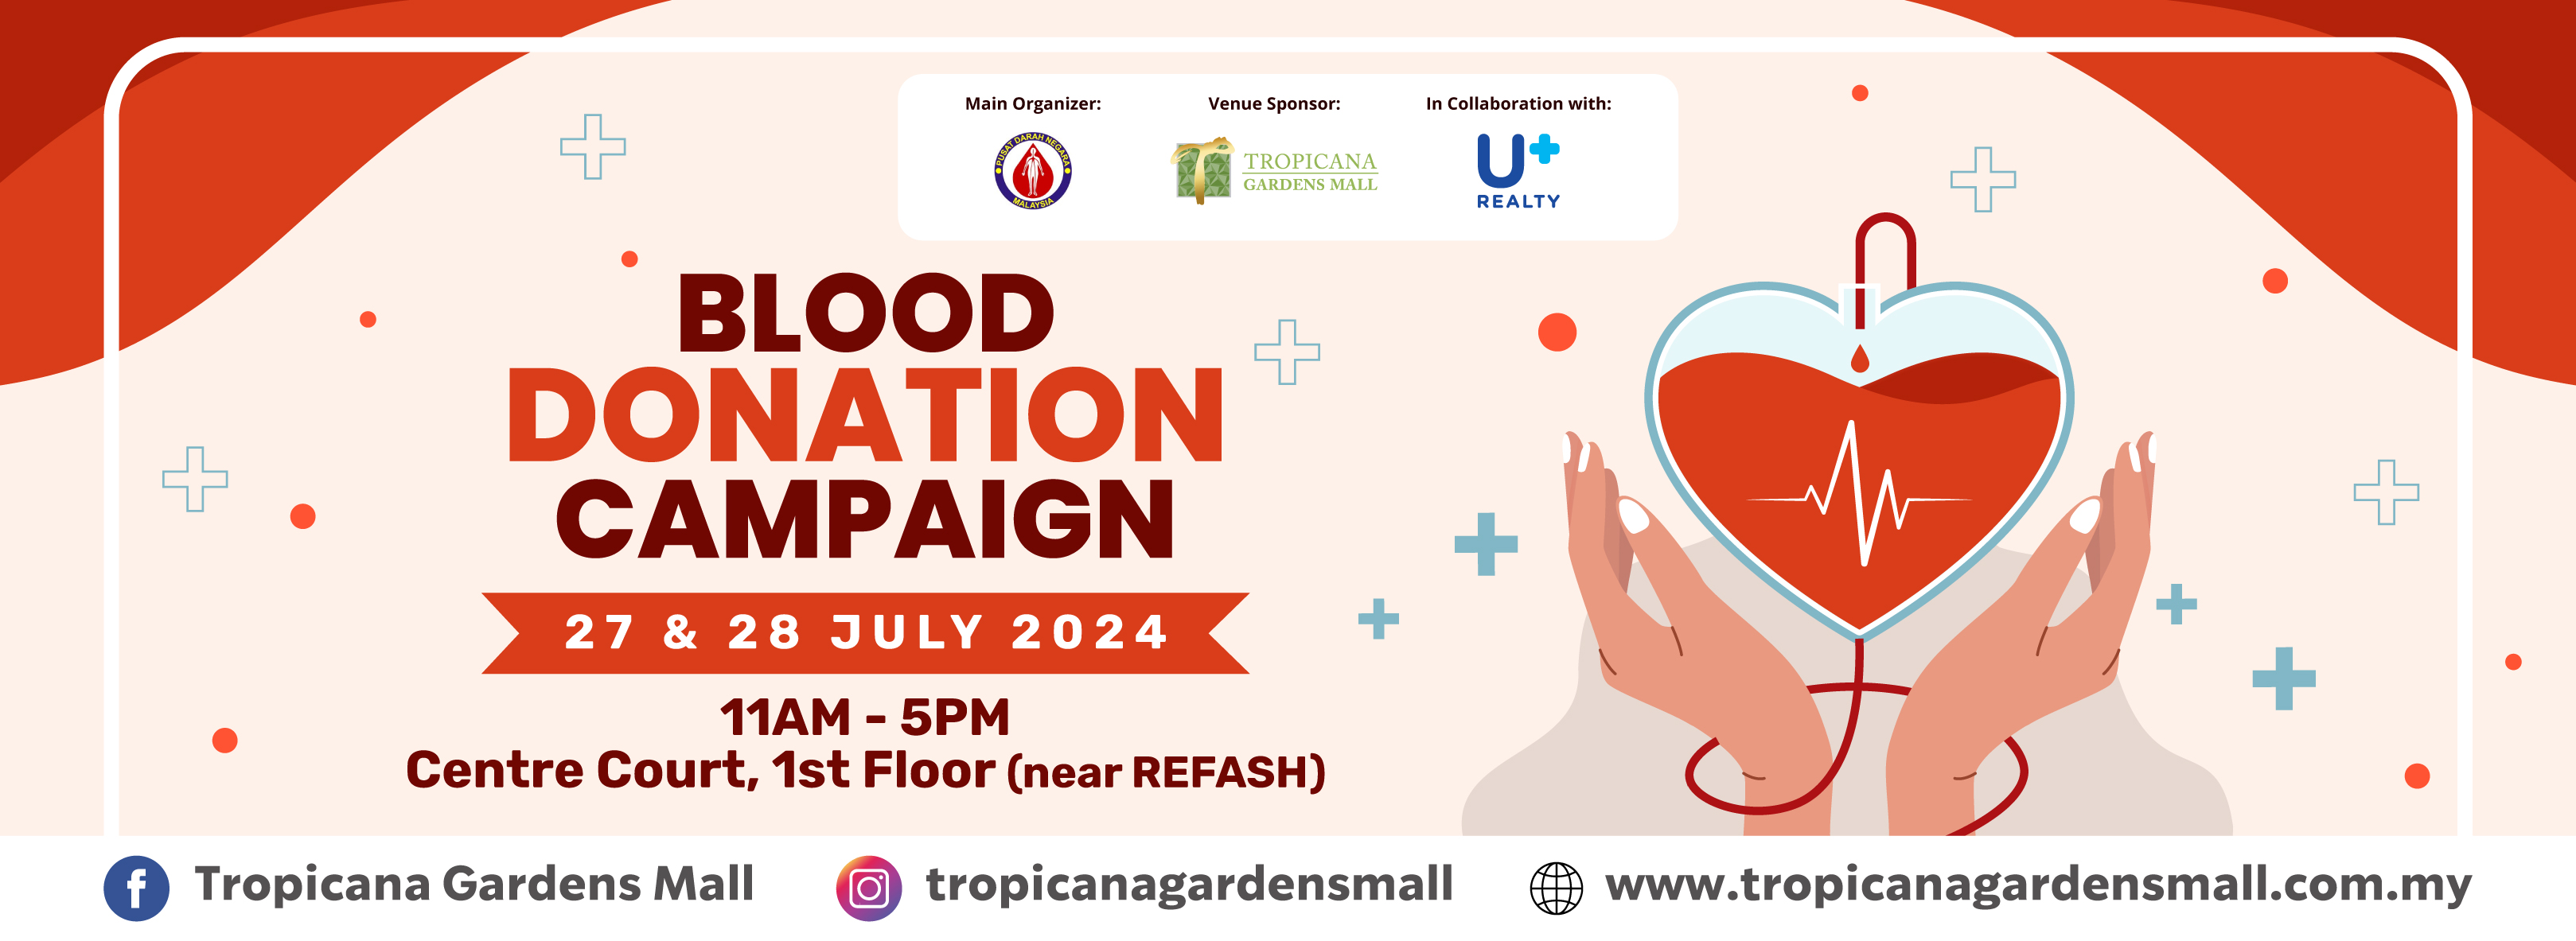 Tropicana Gardens Mall Blood Donation Campaign